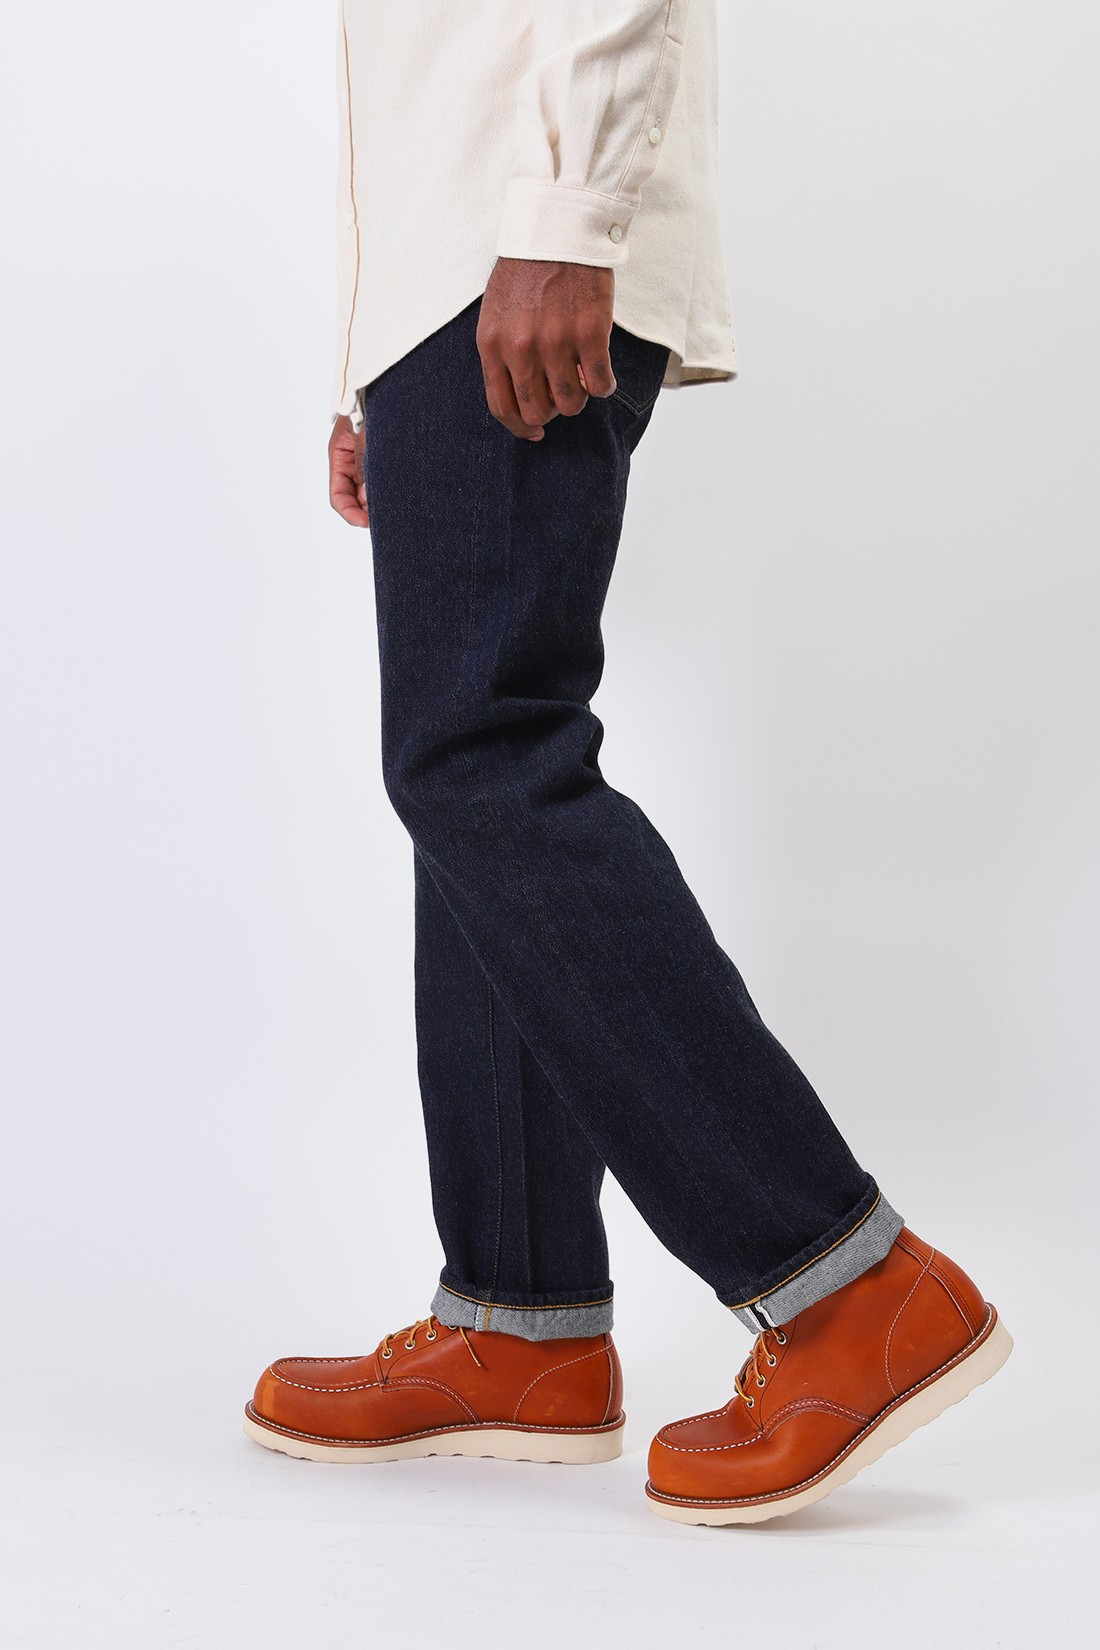 LEVI'S ® VINTAGE CLOTHING / 1954 501 jeans new rinsed N0606 v2